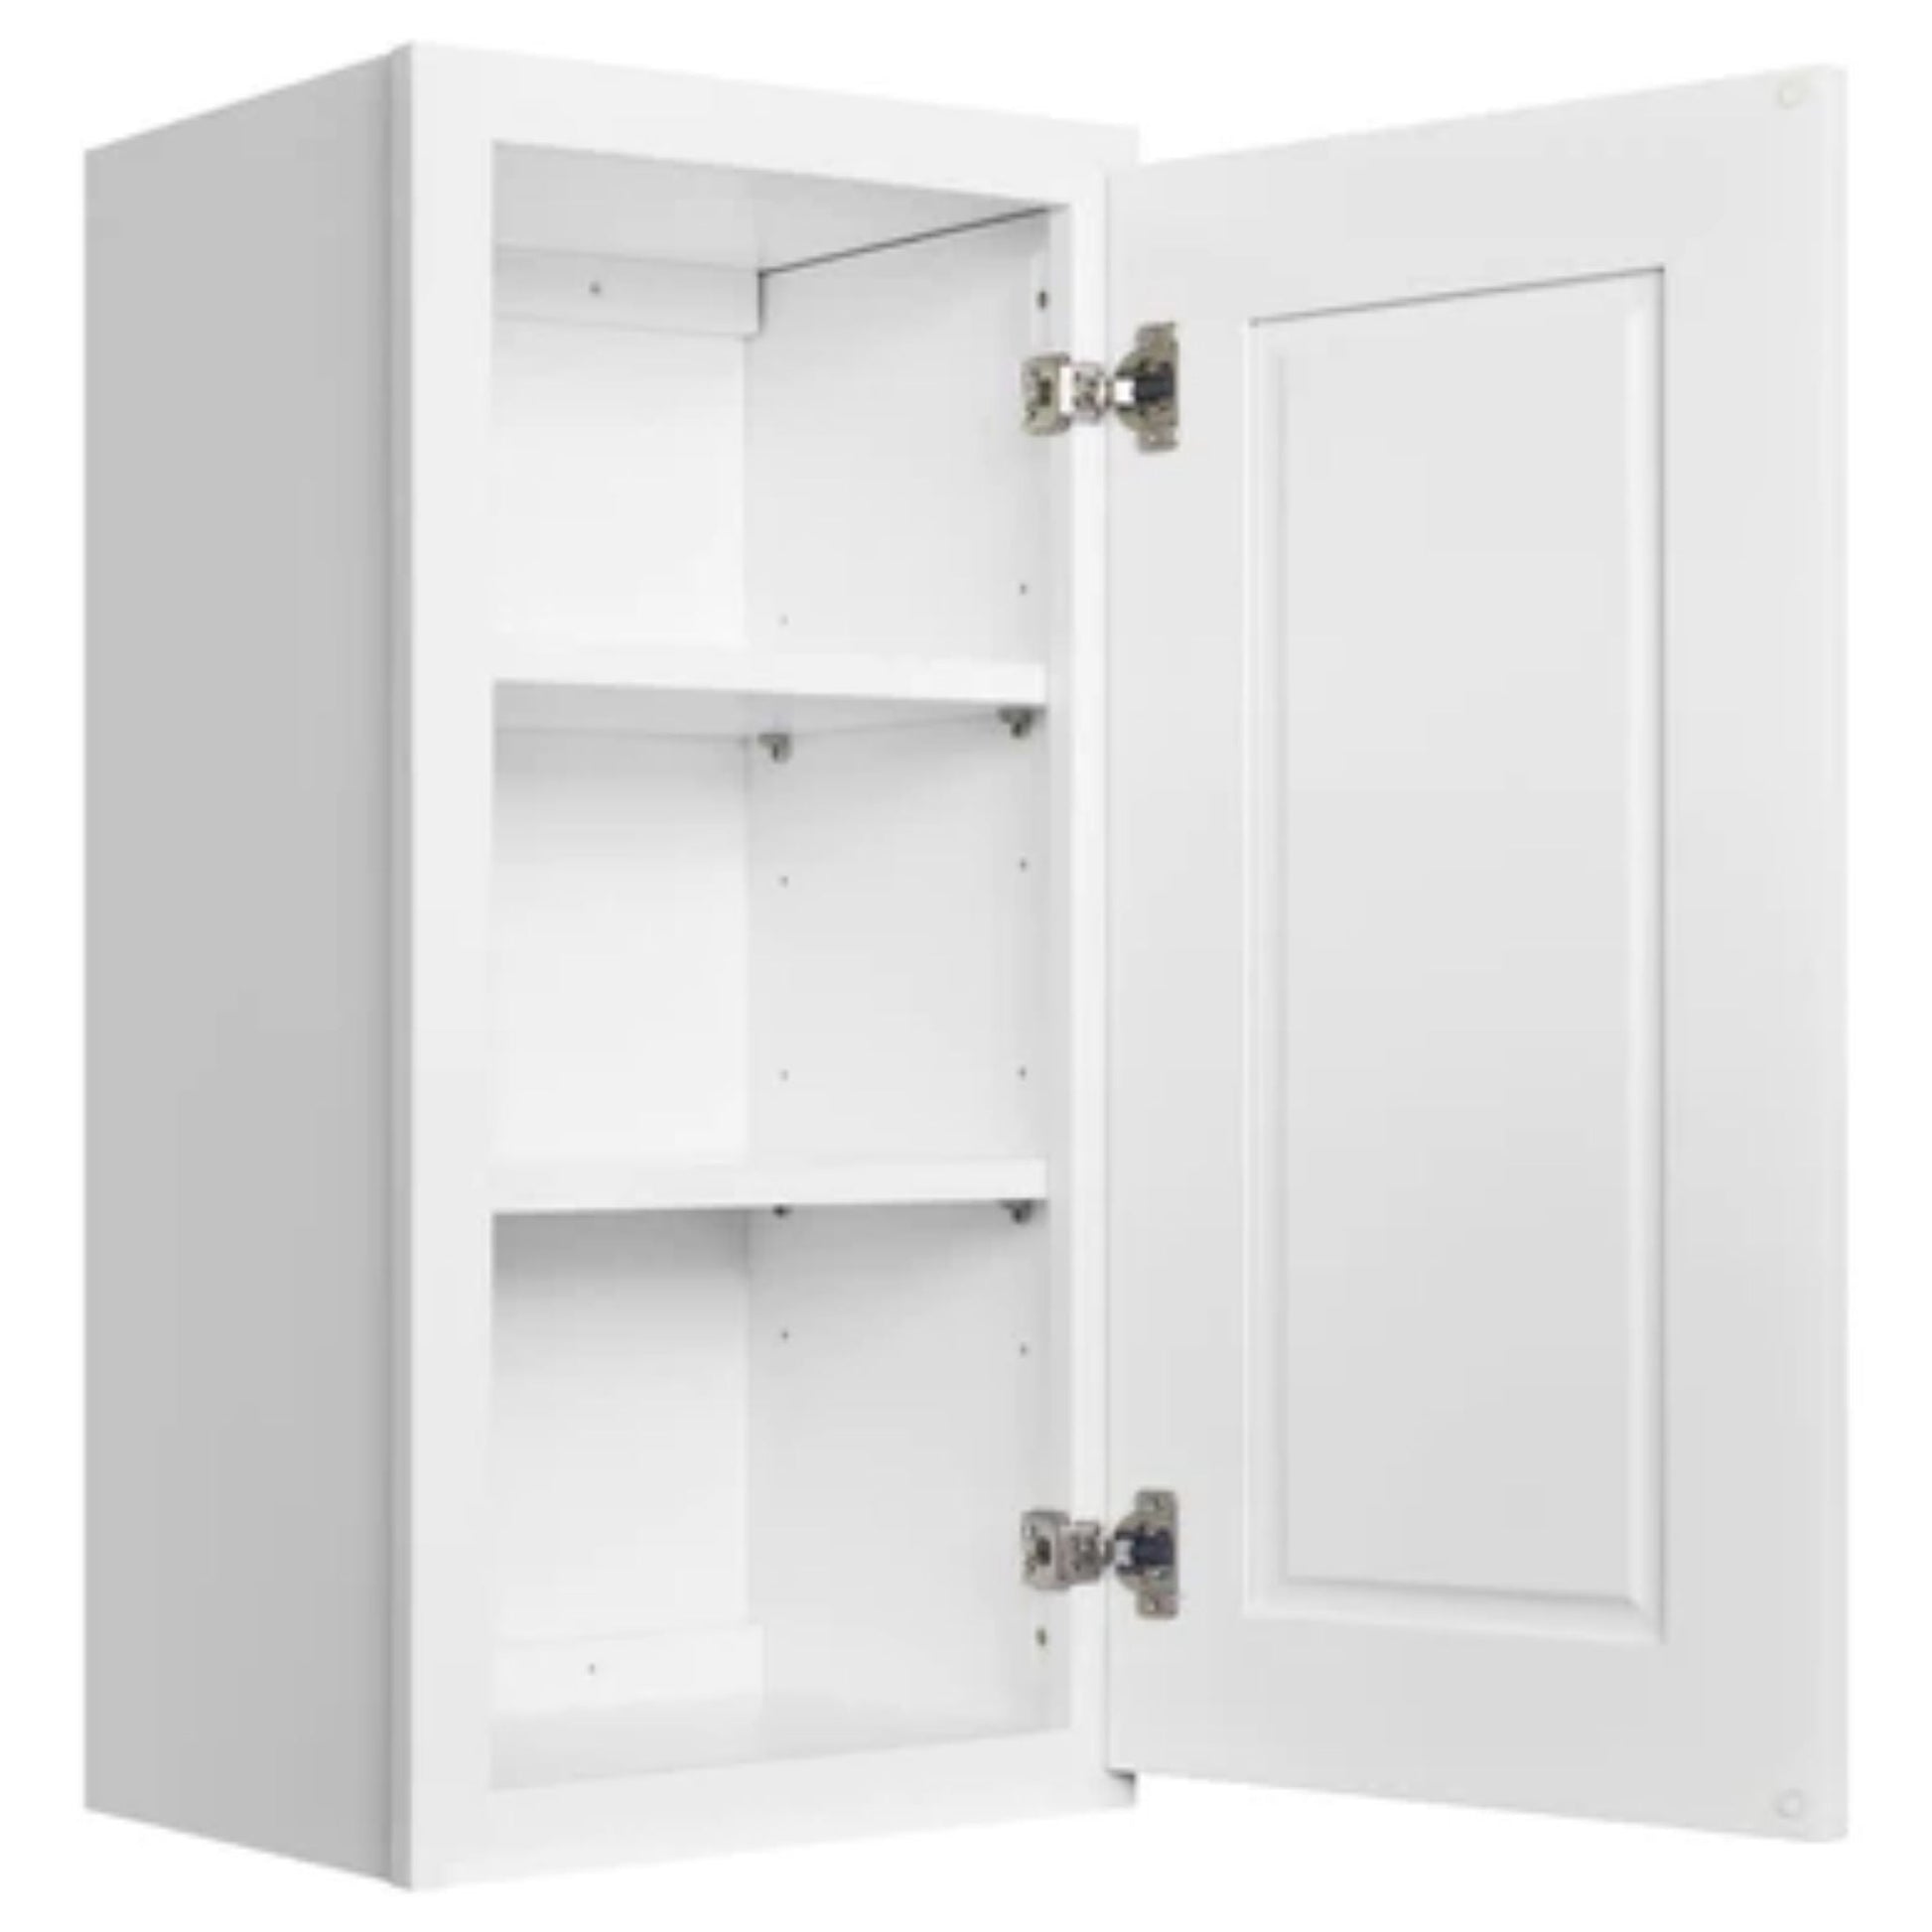 LessCare 48" x 34.5" x 21" Alpina White Vanity Sink Base Cabinet